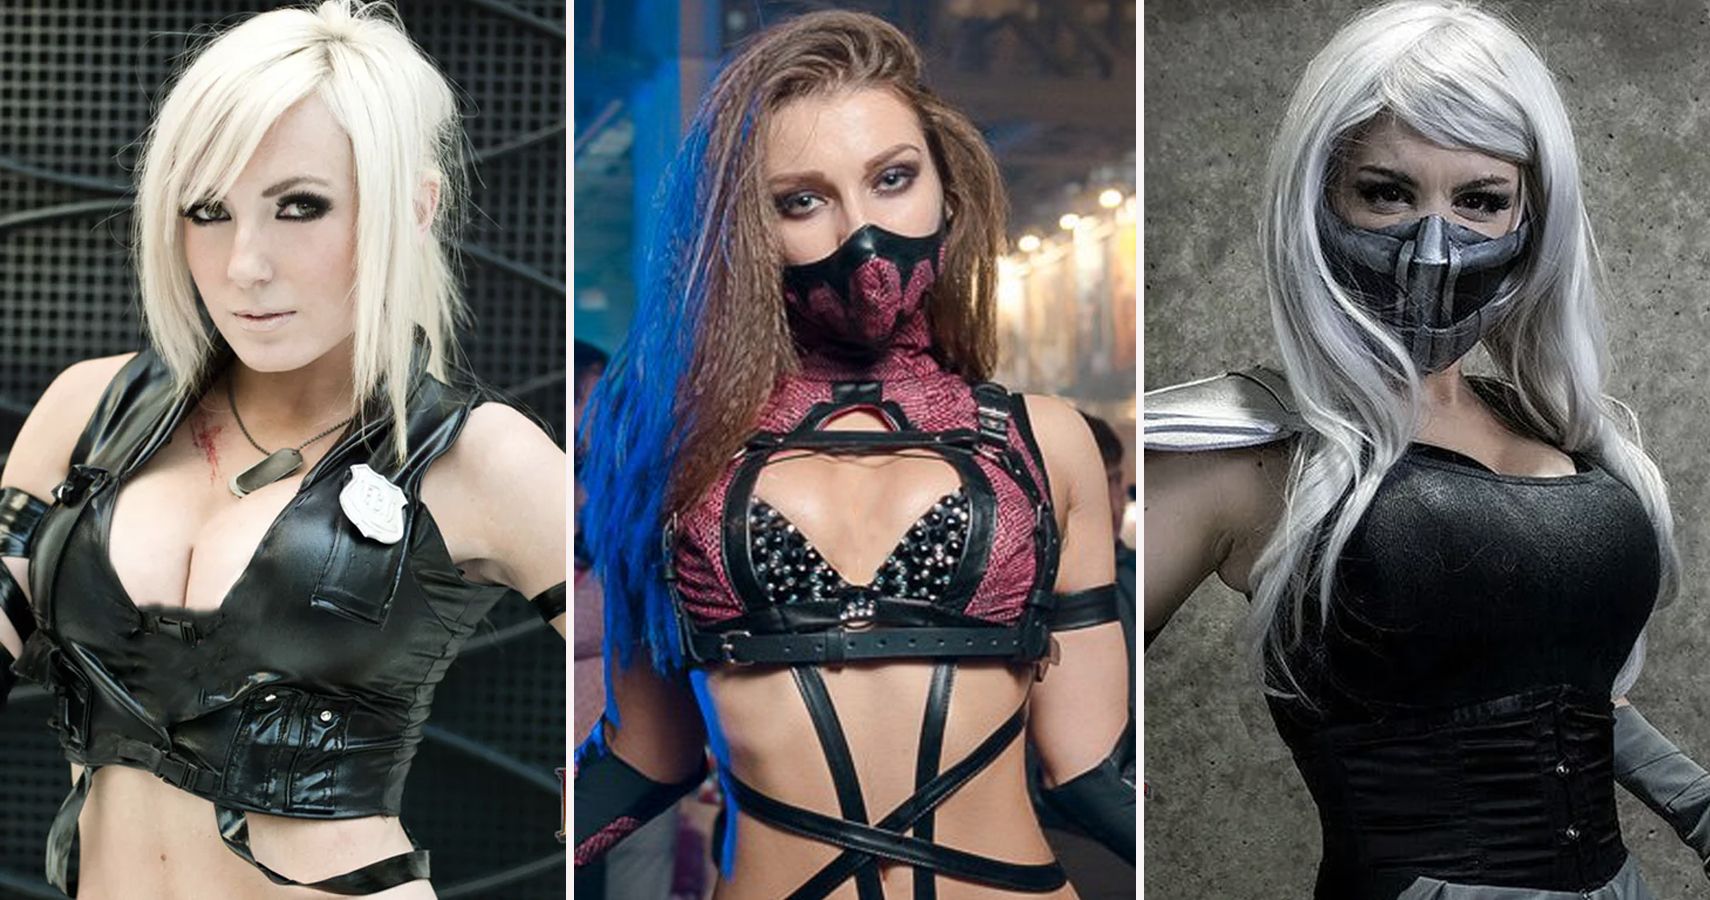 Mortal Kombat Female Cosplay Costumes.